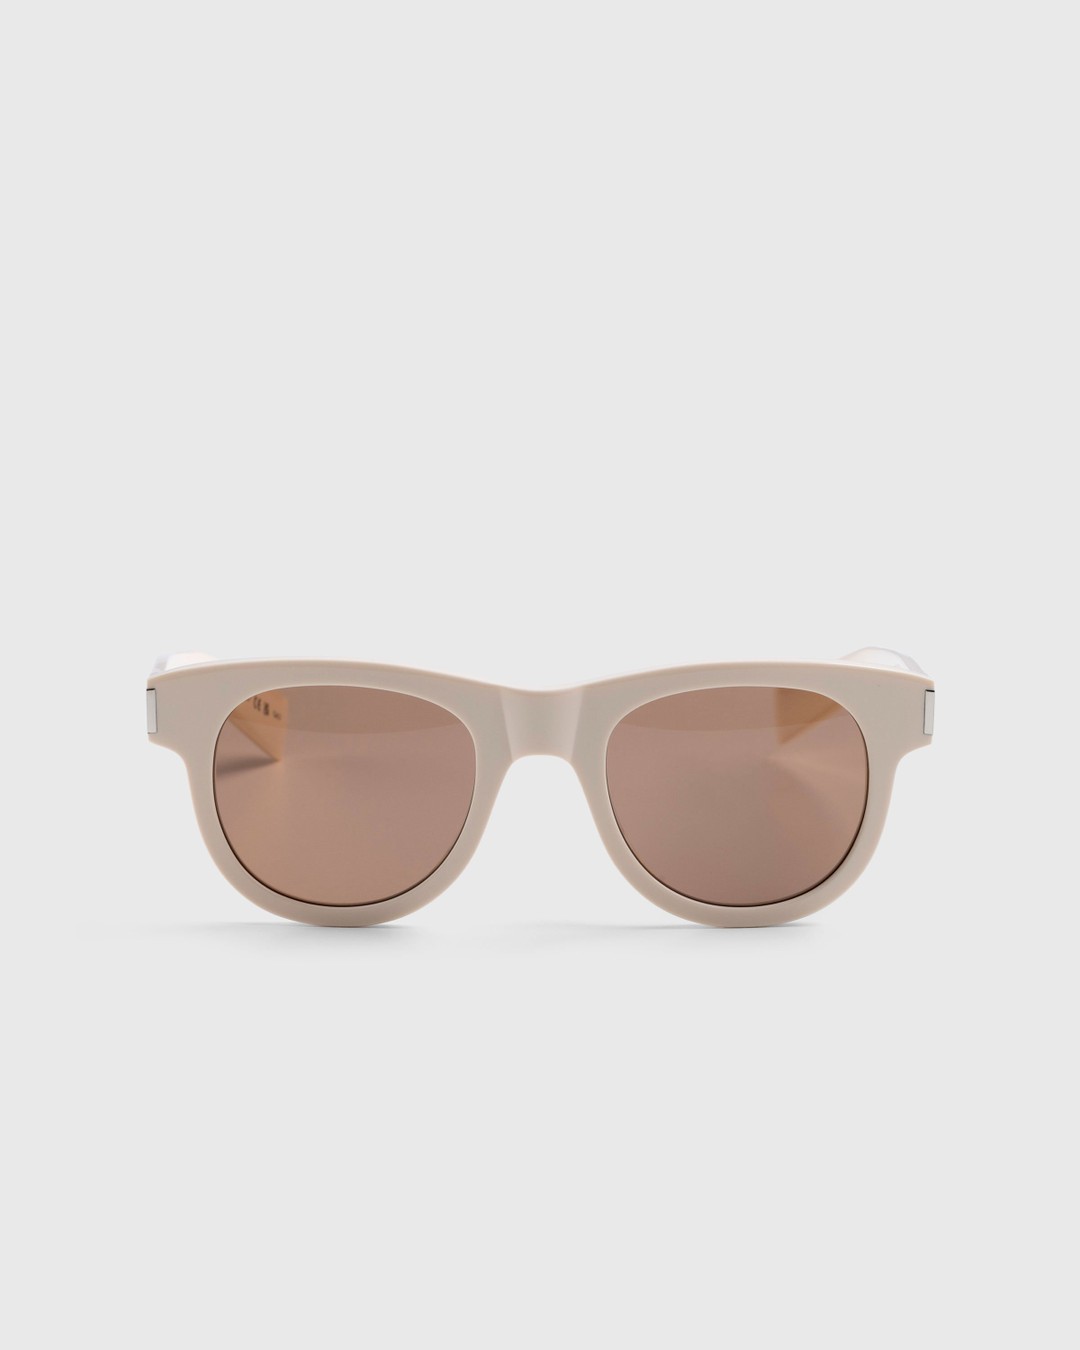 Saint Laurent – SL 571 Round Frame Sunglasses Ivory/Brown - Eyewear - Multi - Image 1